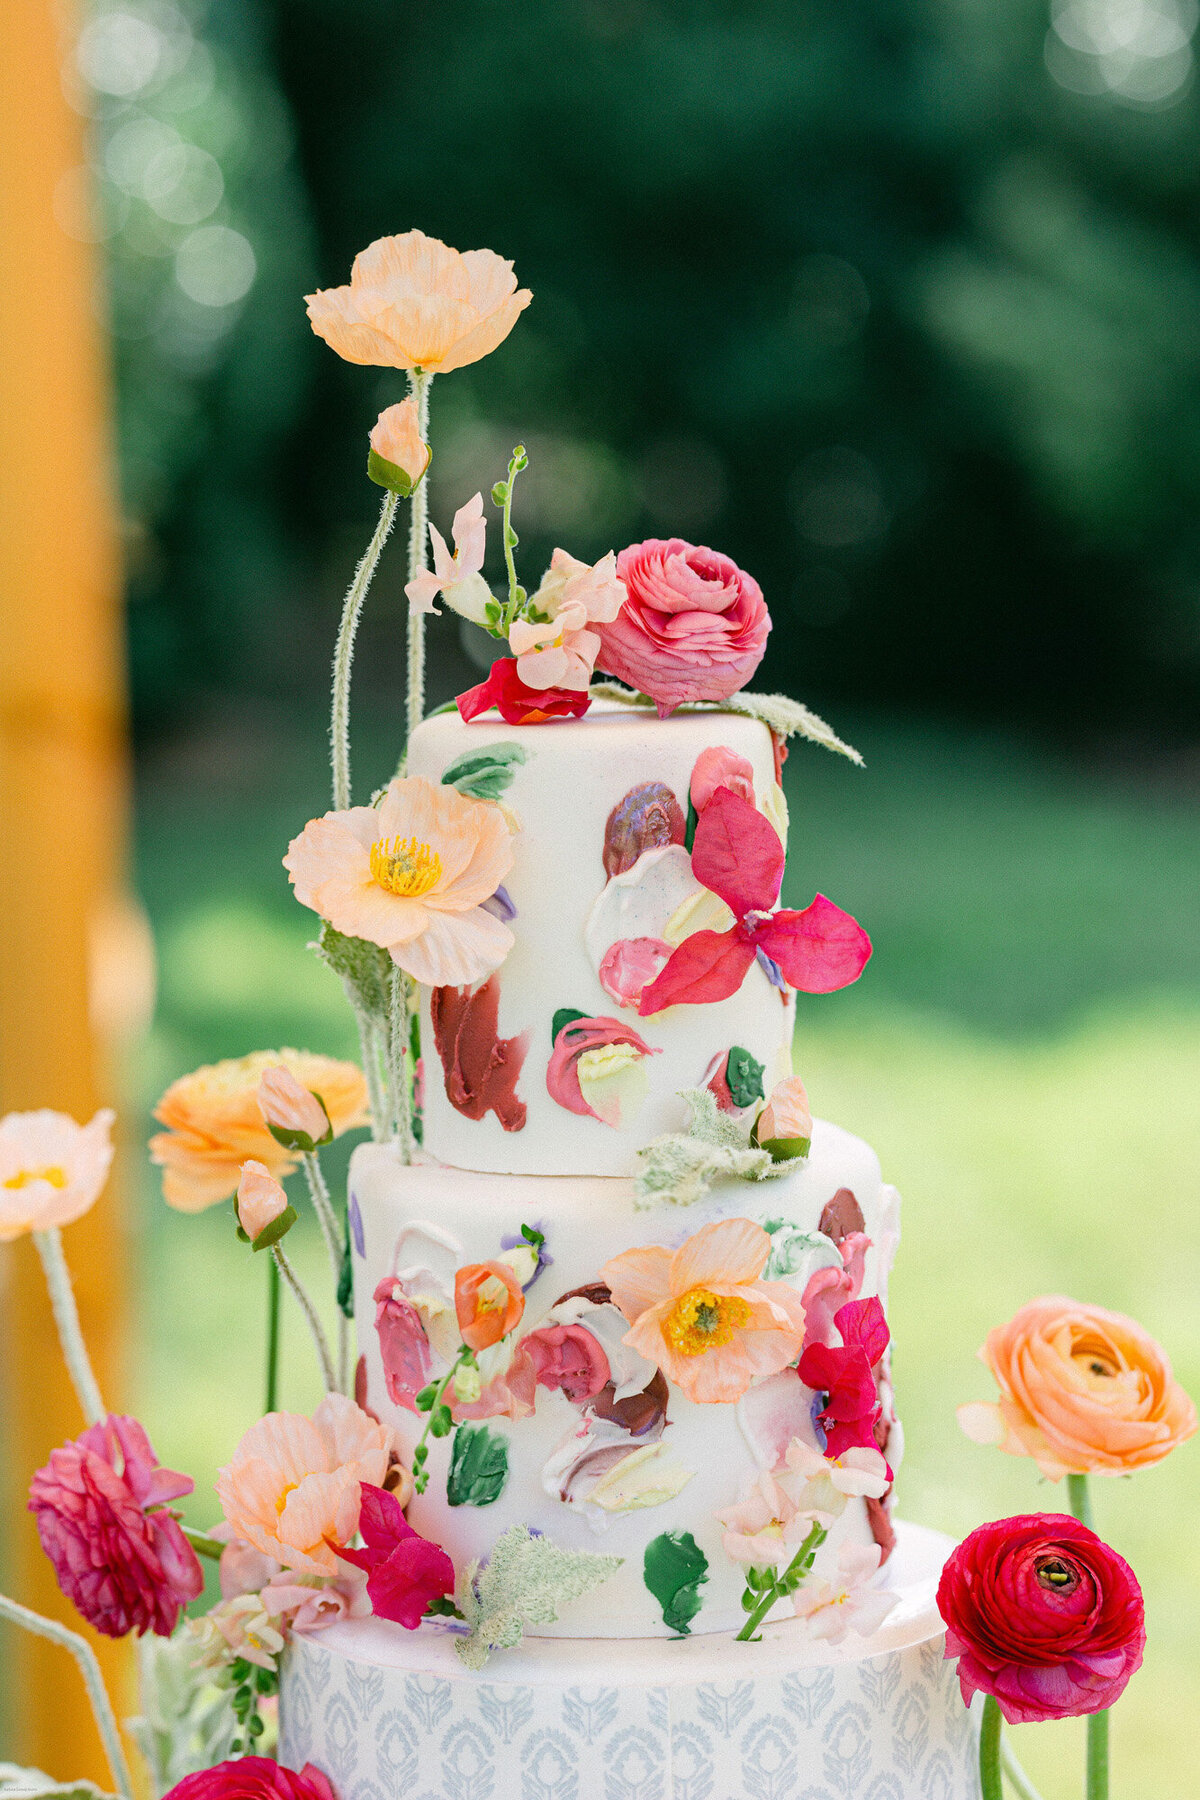 elegant colorful cake with floral details